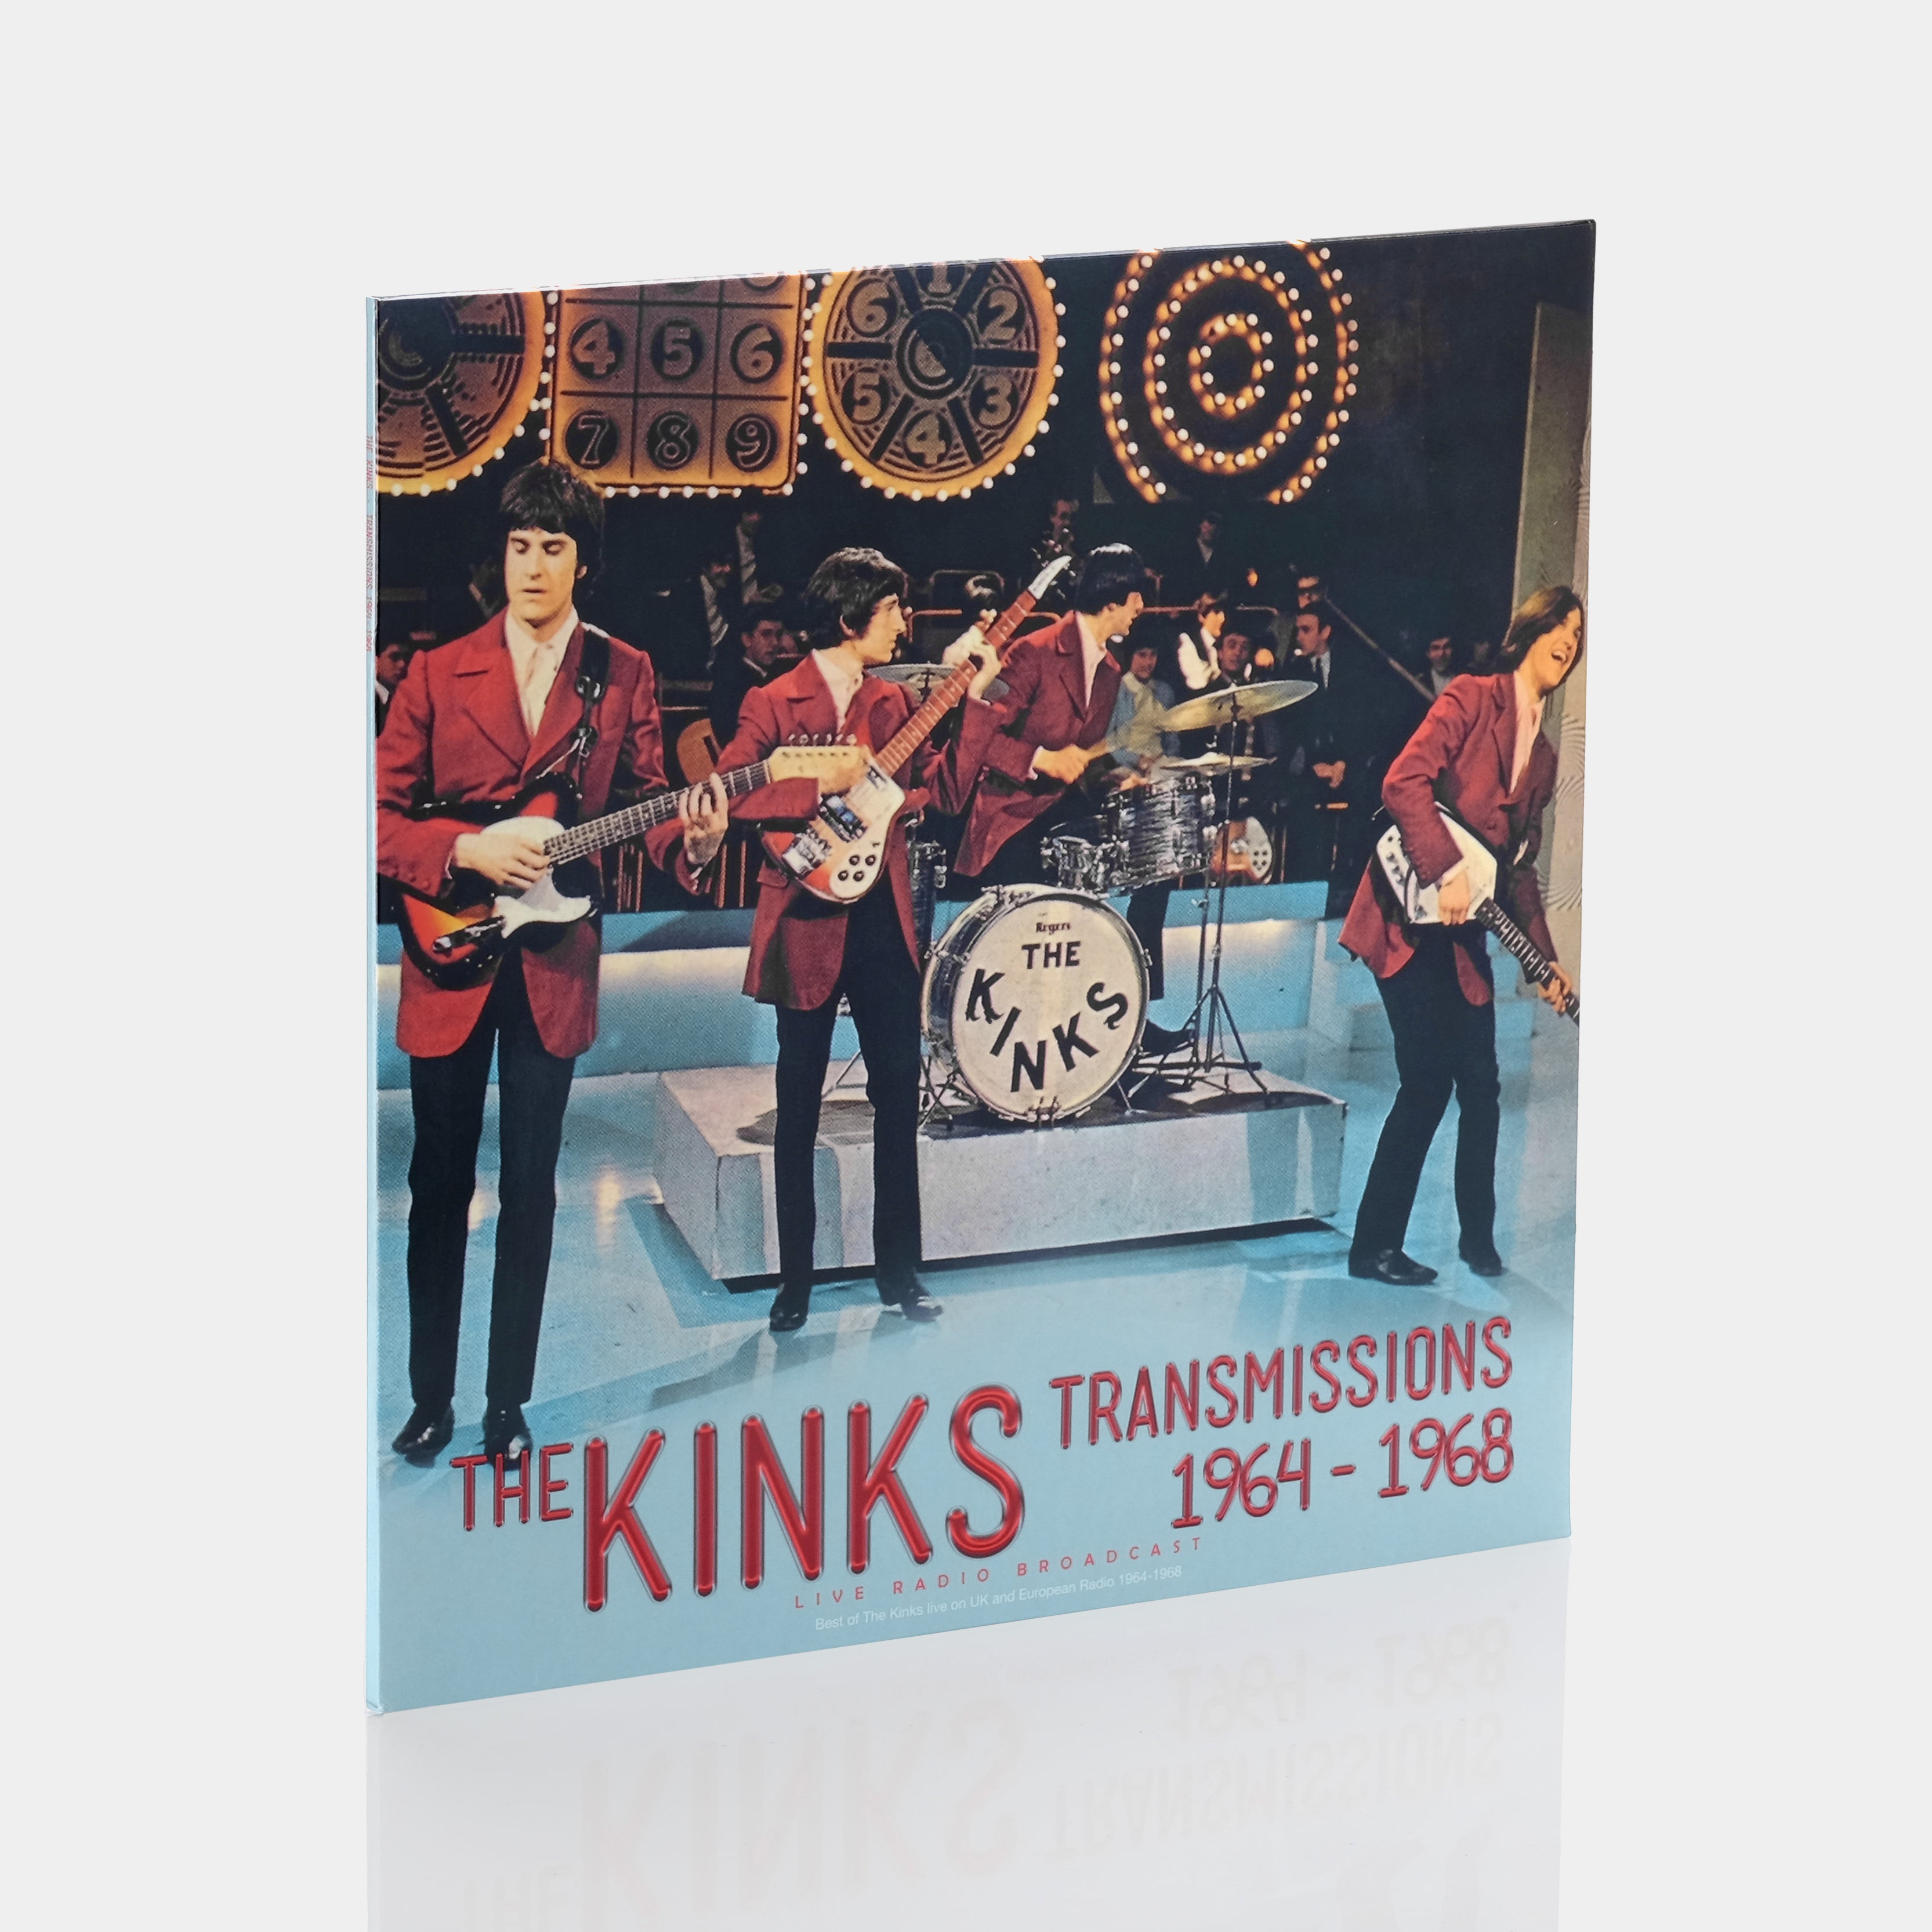 The Kinks - Transmissions 1964-1968 LP Vinyl Record